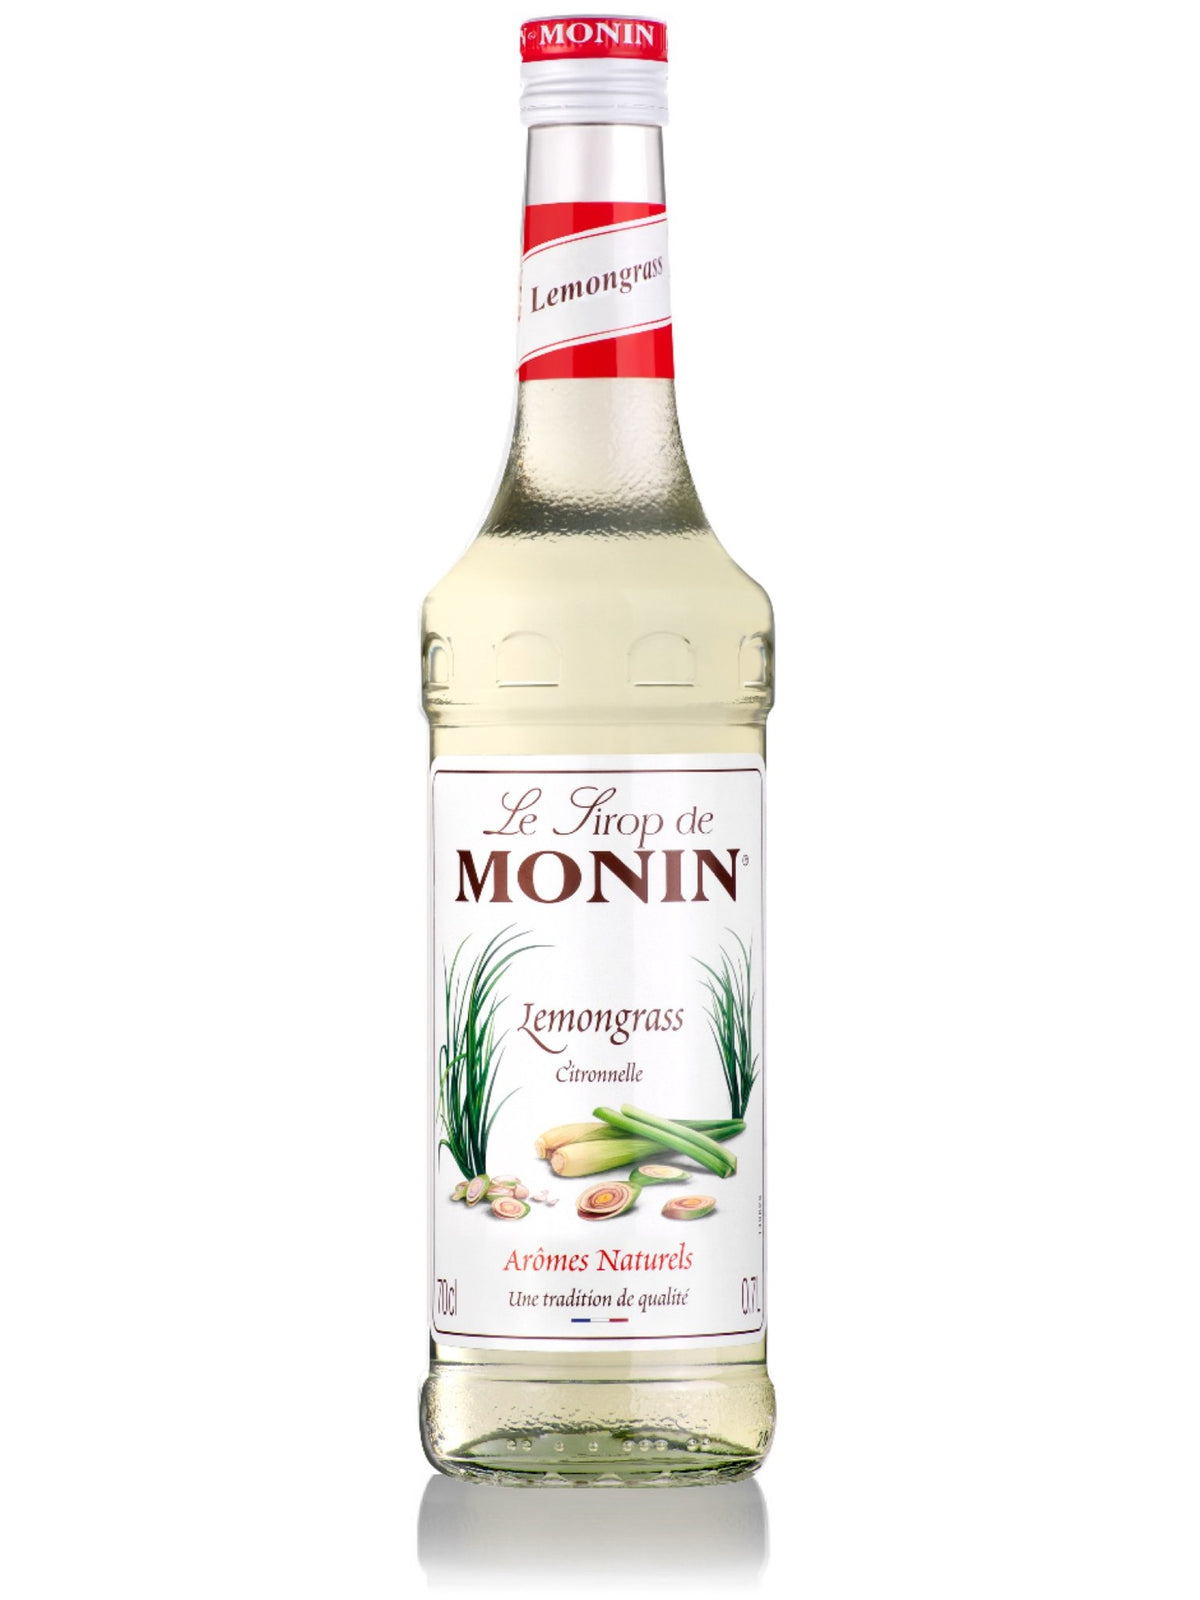 Prøv Monin Lemongrass Sirup for en eksotisk twist til dine sommerdrikke og mocktails